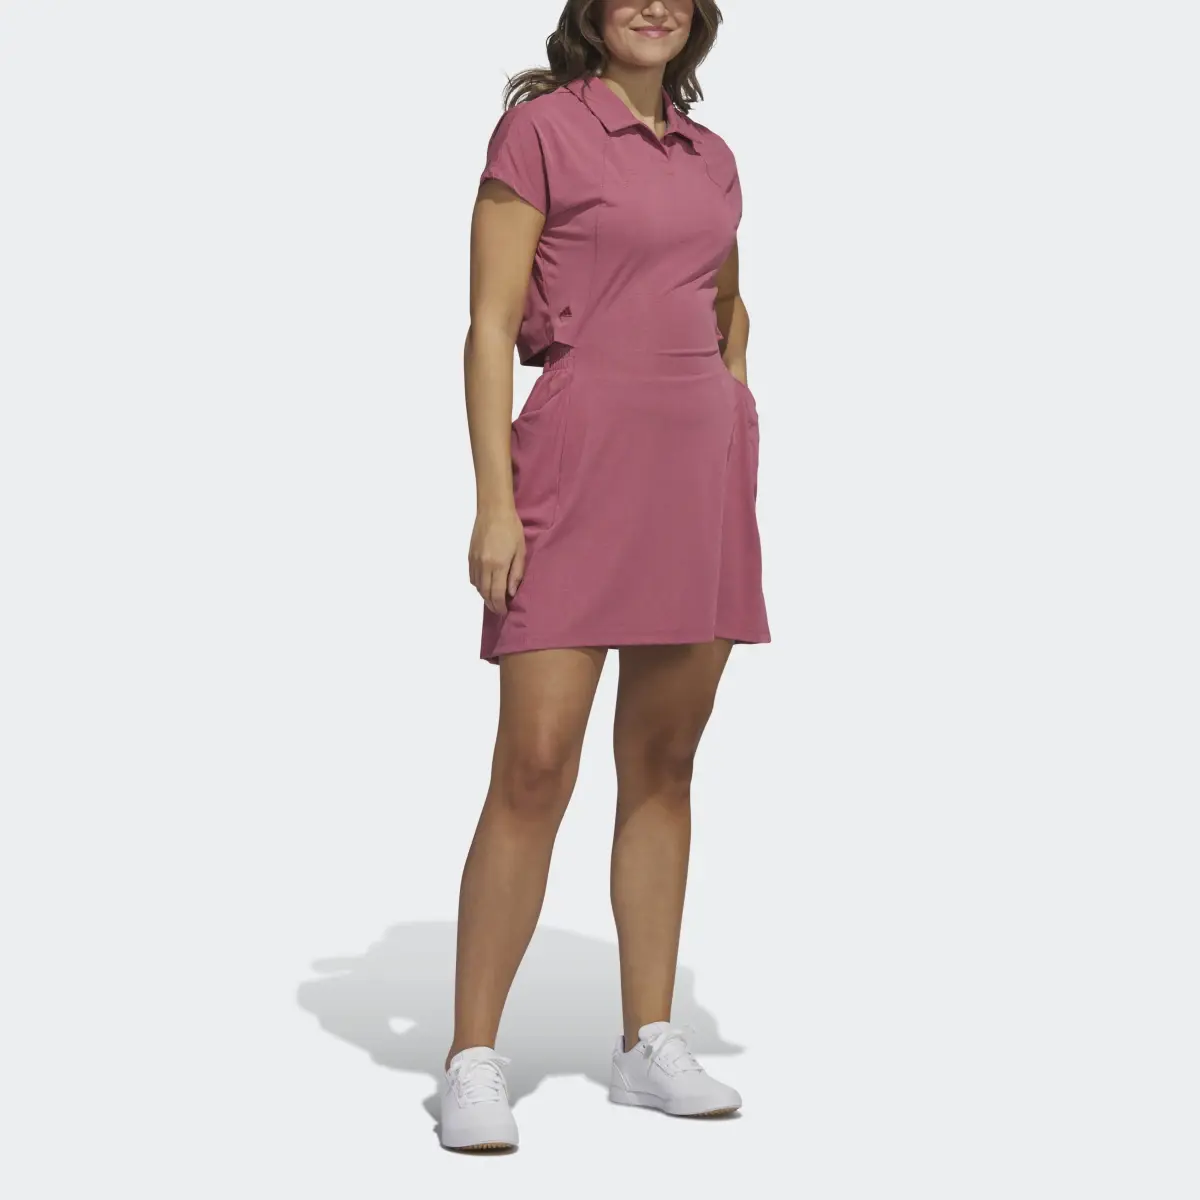 Adidas Go-To Golf Dress. 1